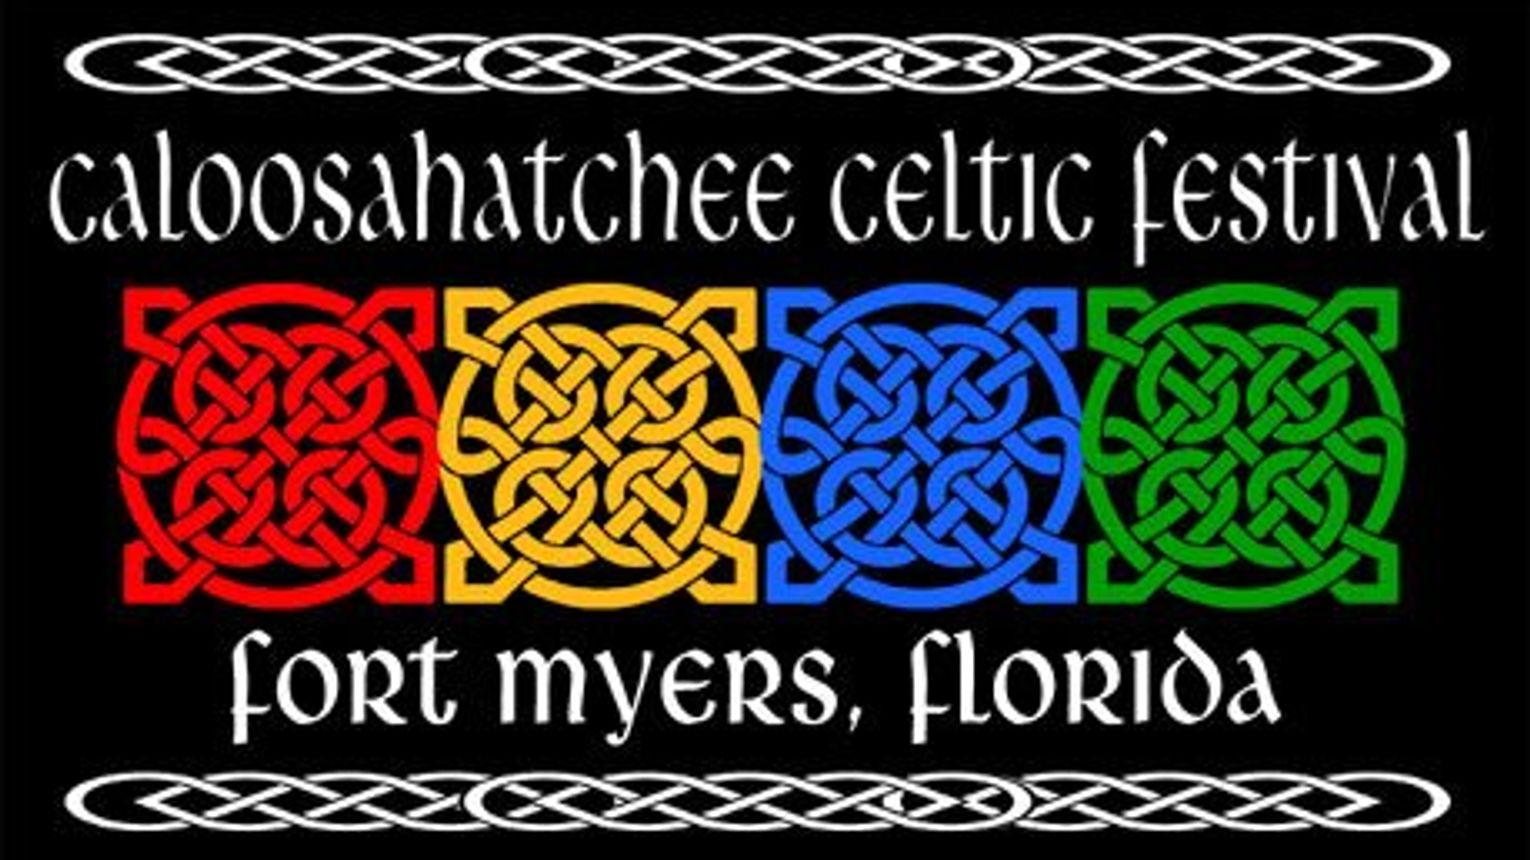 The Caloosahatchee Celtic Festival